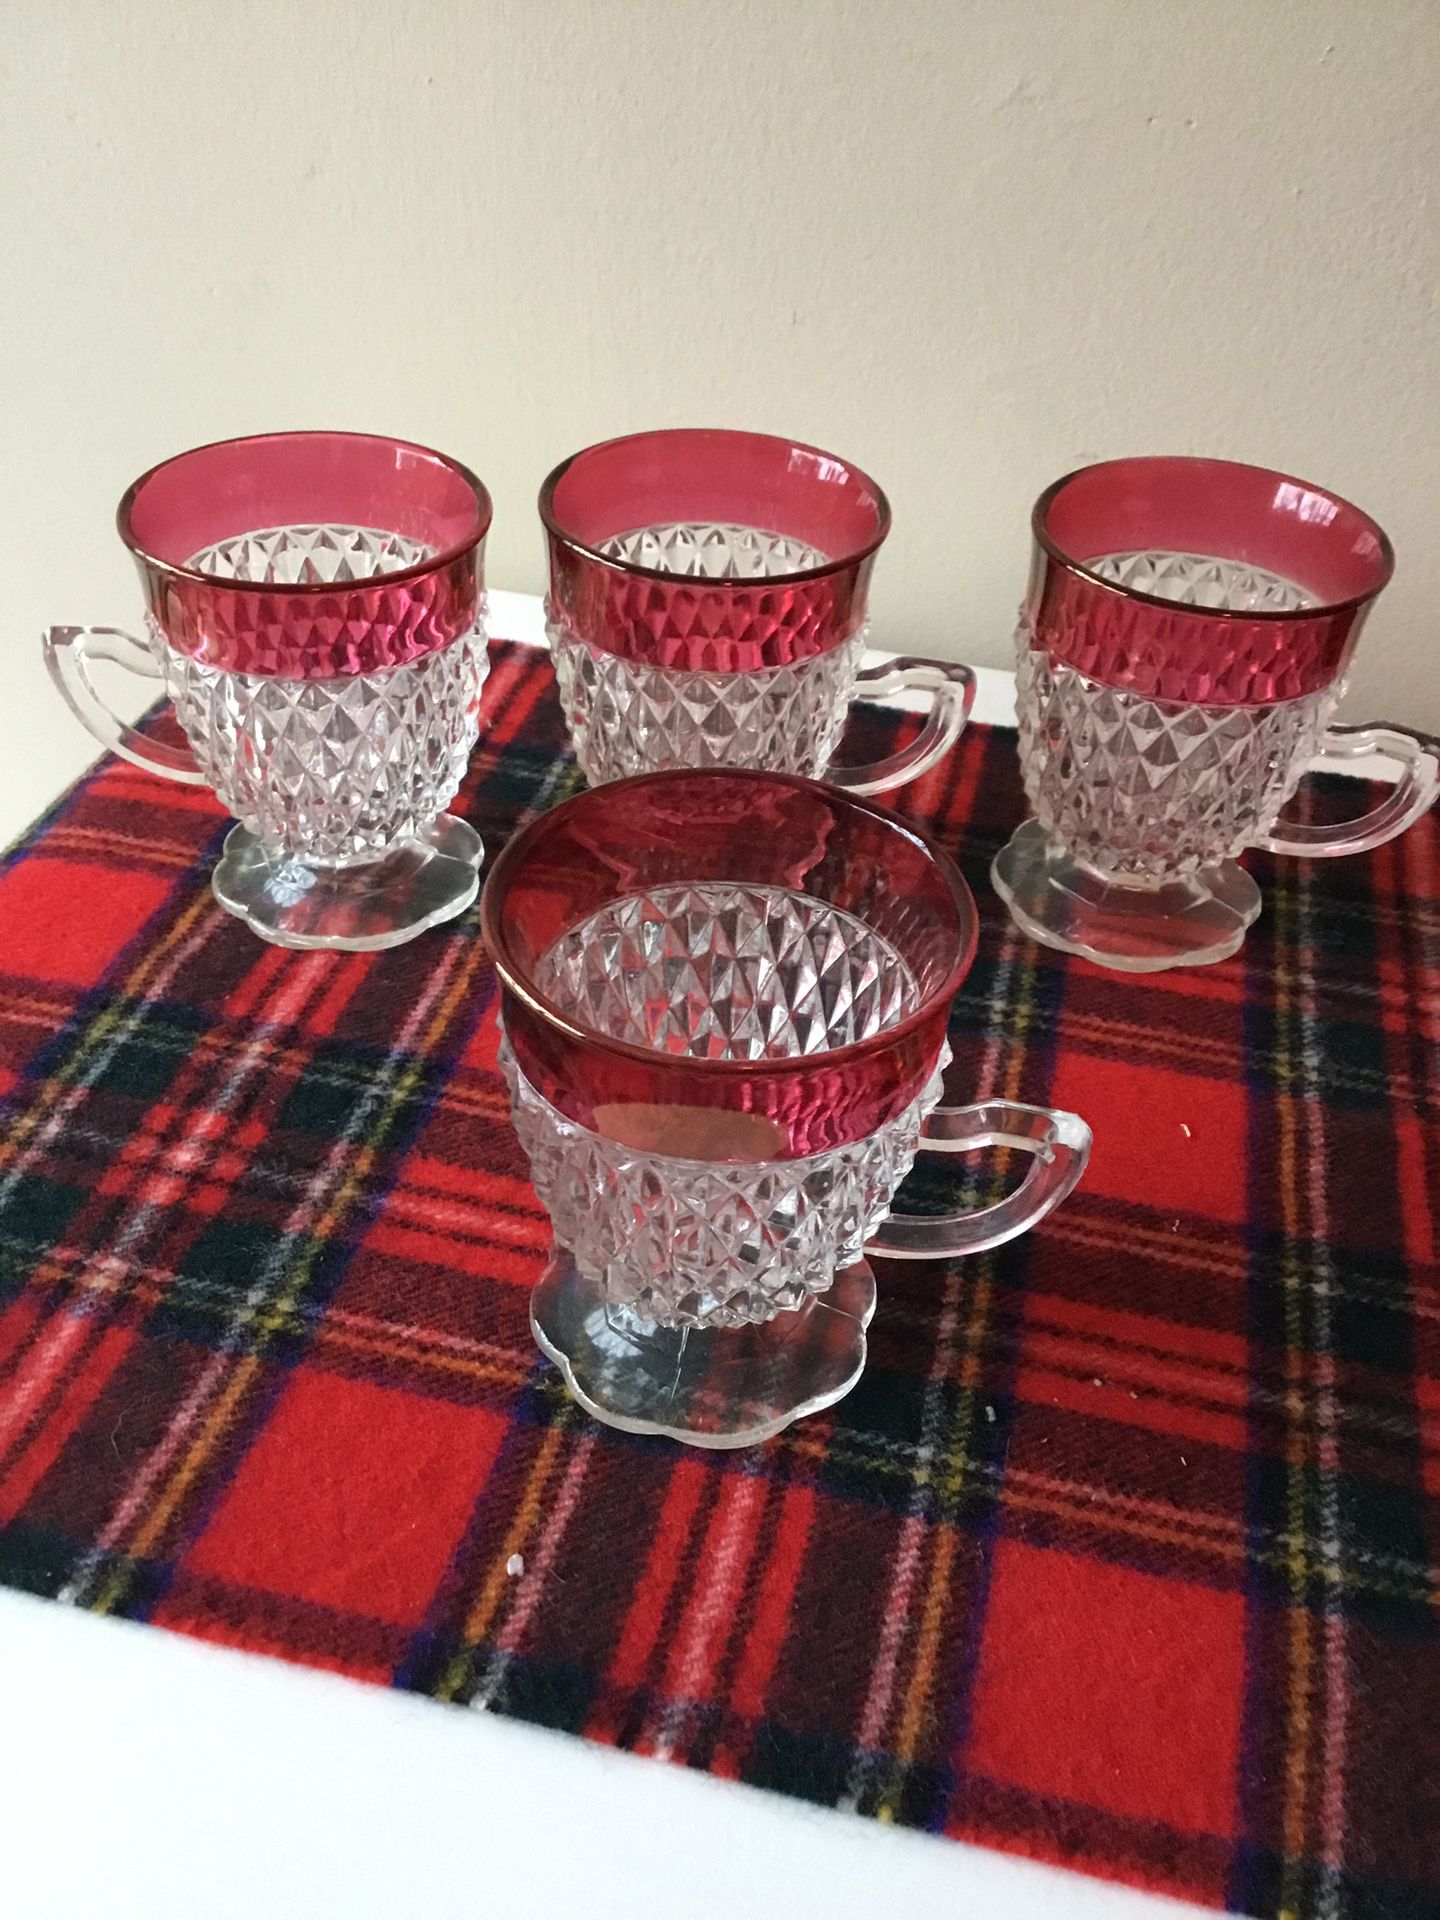 Kings crown matching coffee cups